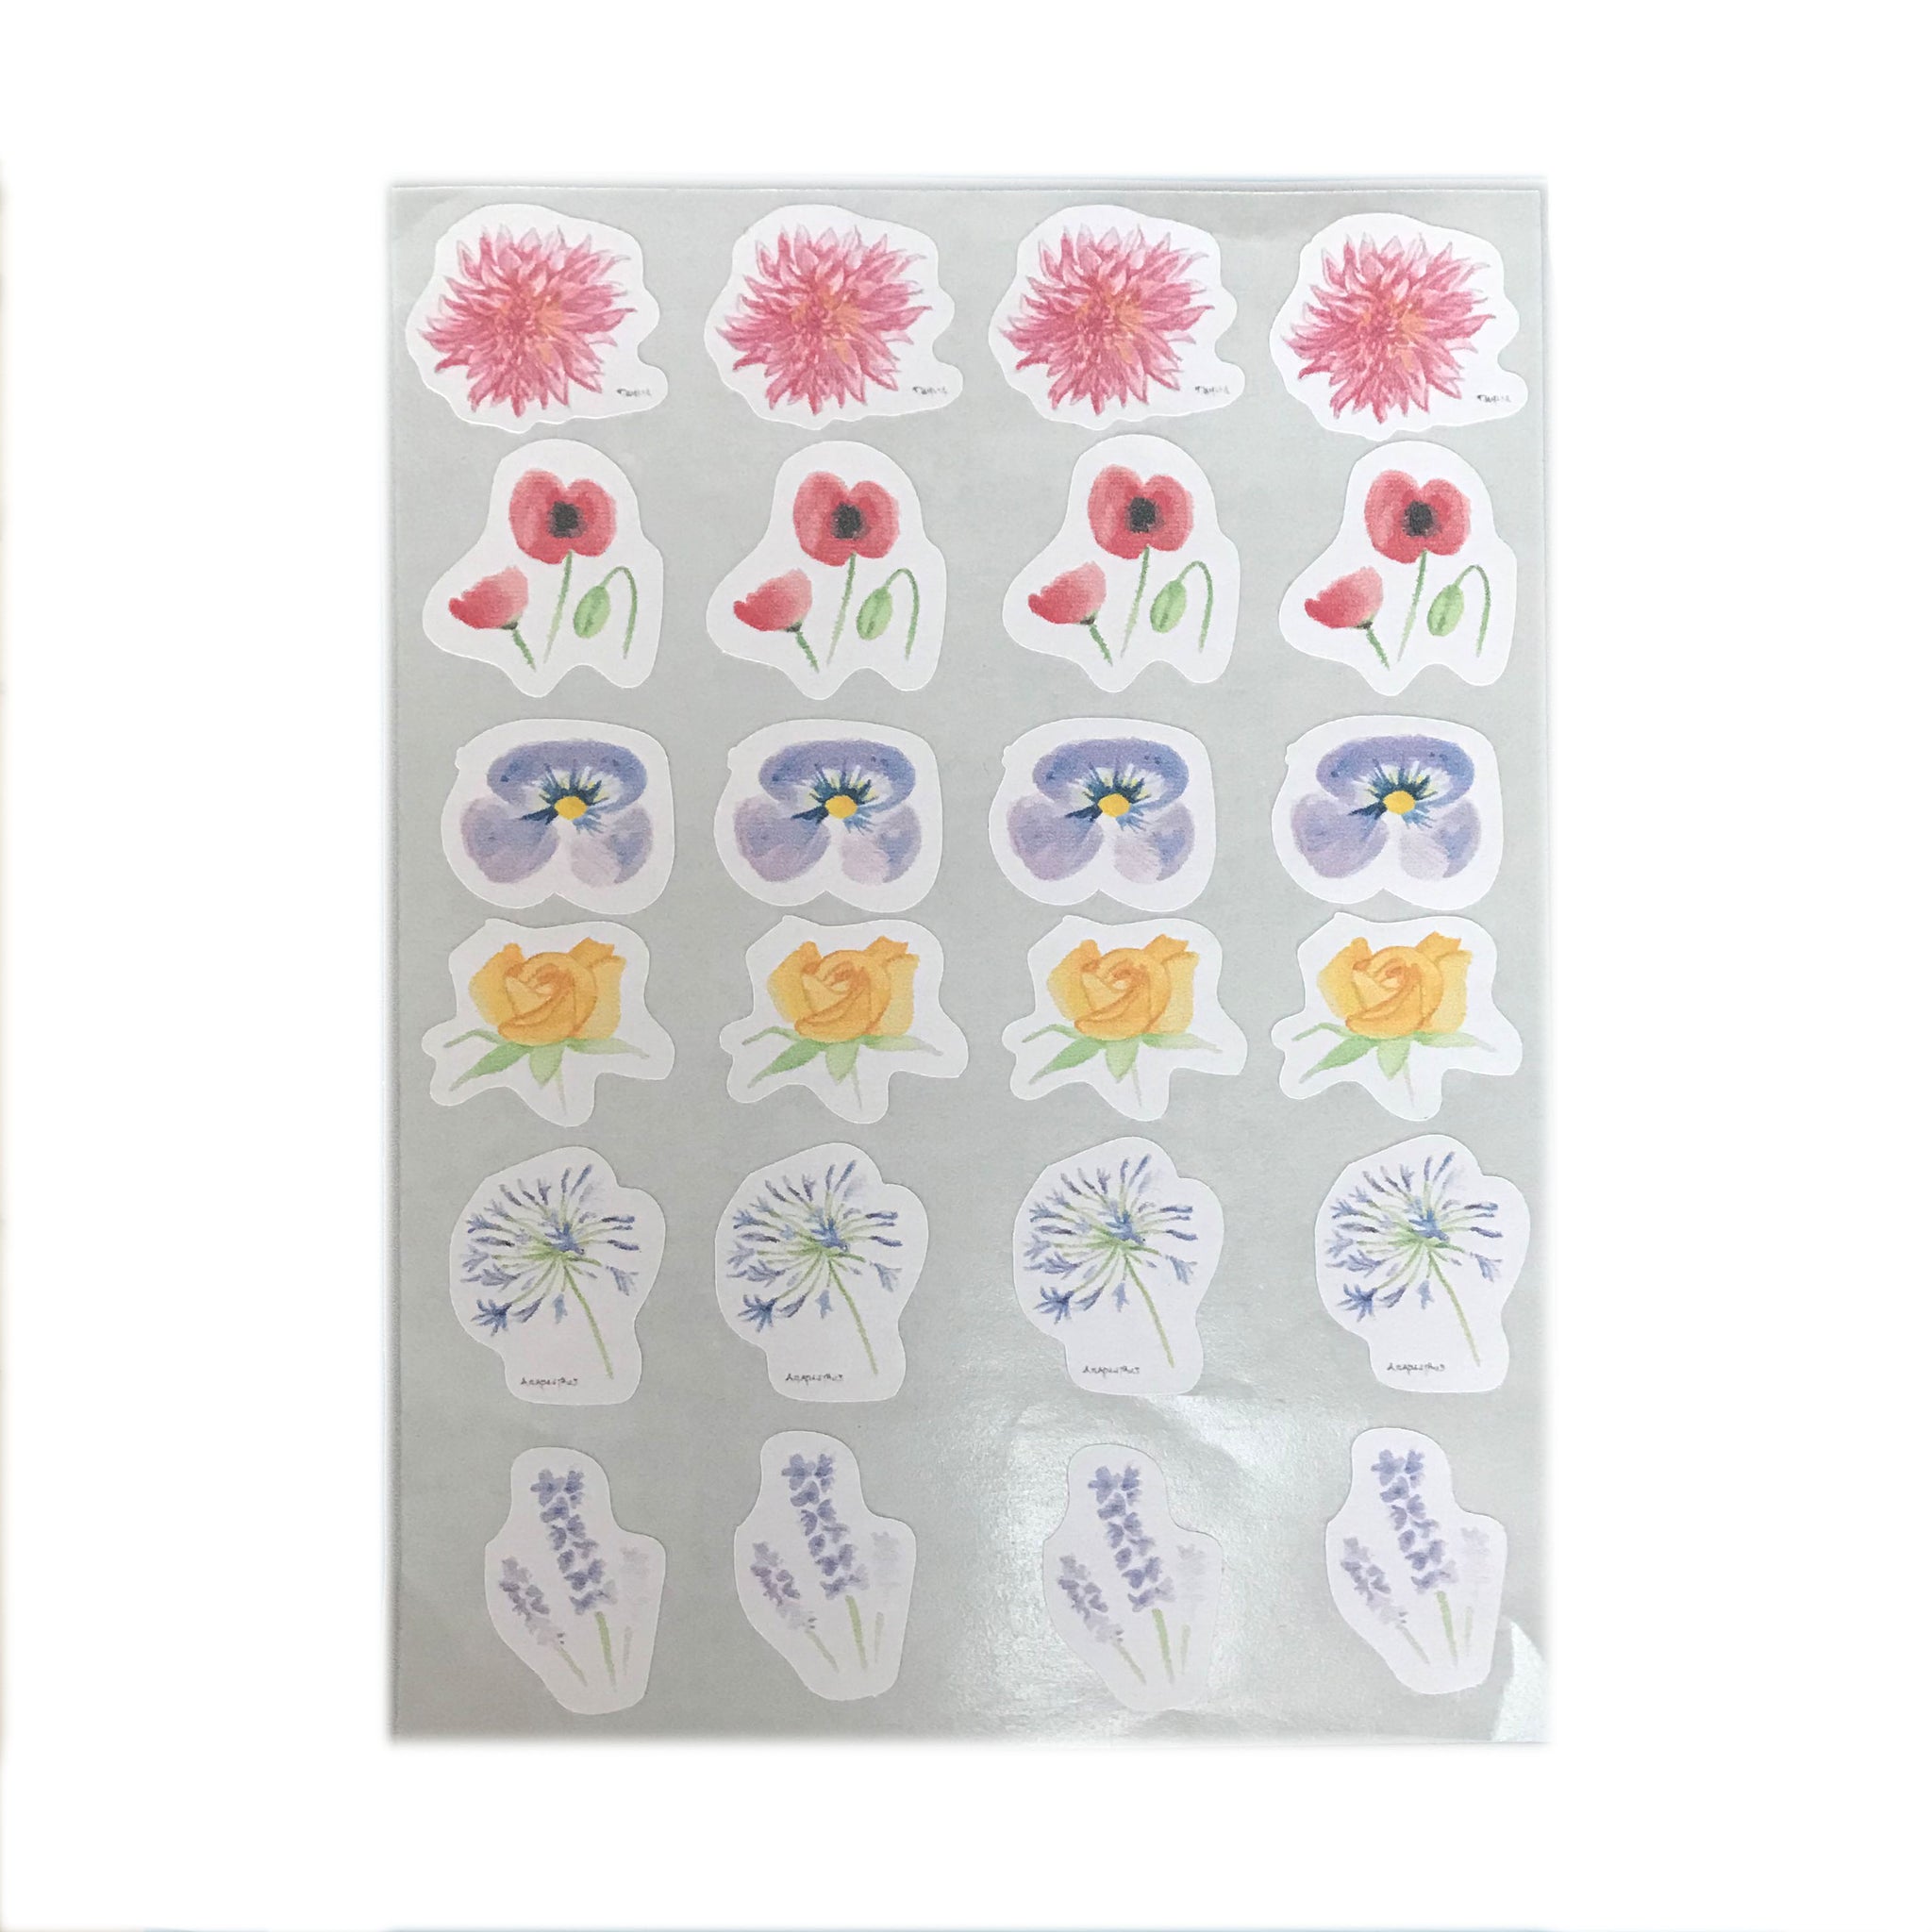 Garden journal sticker pack - Flowers